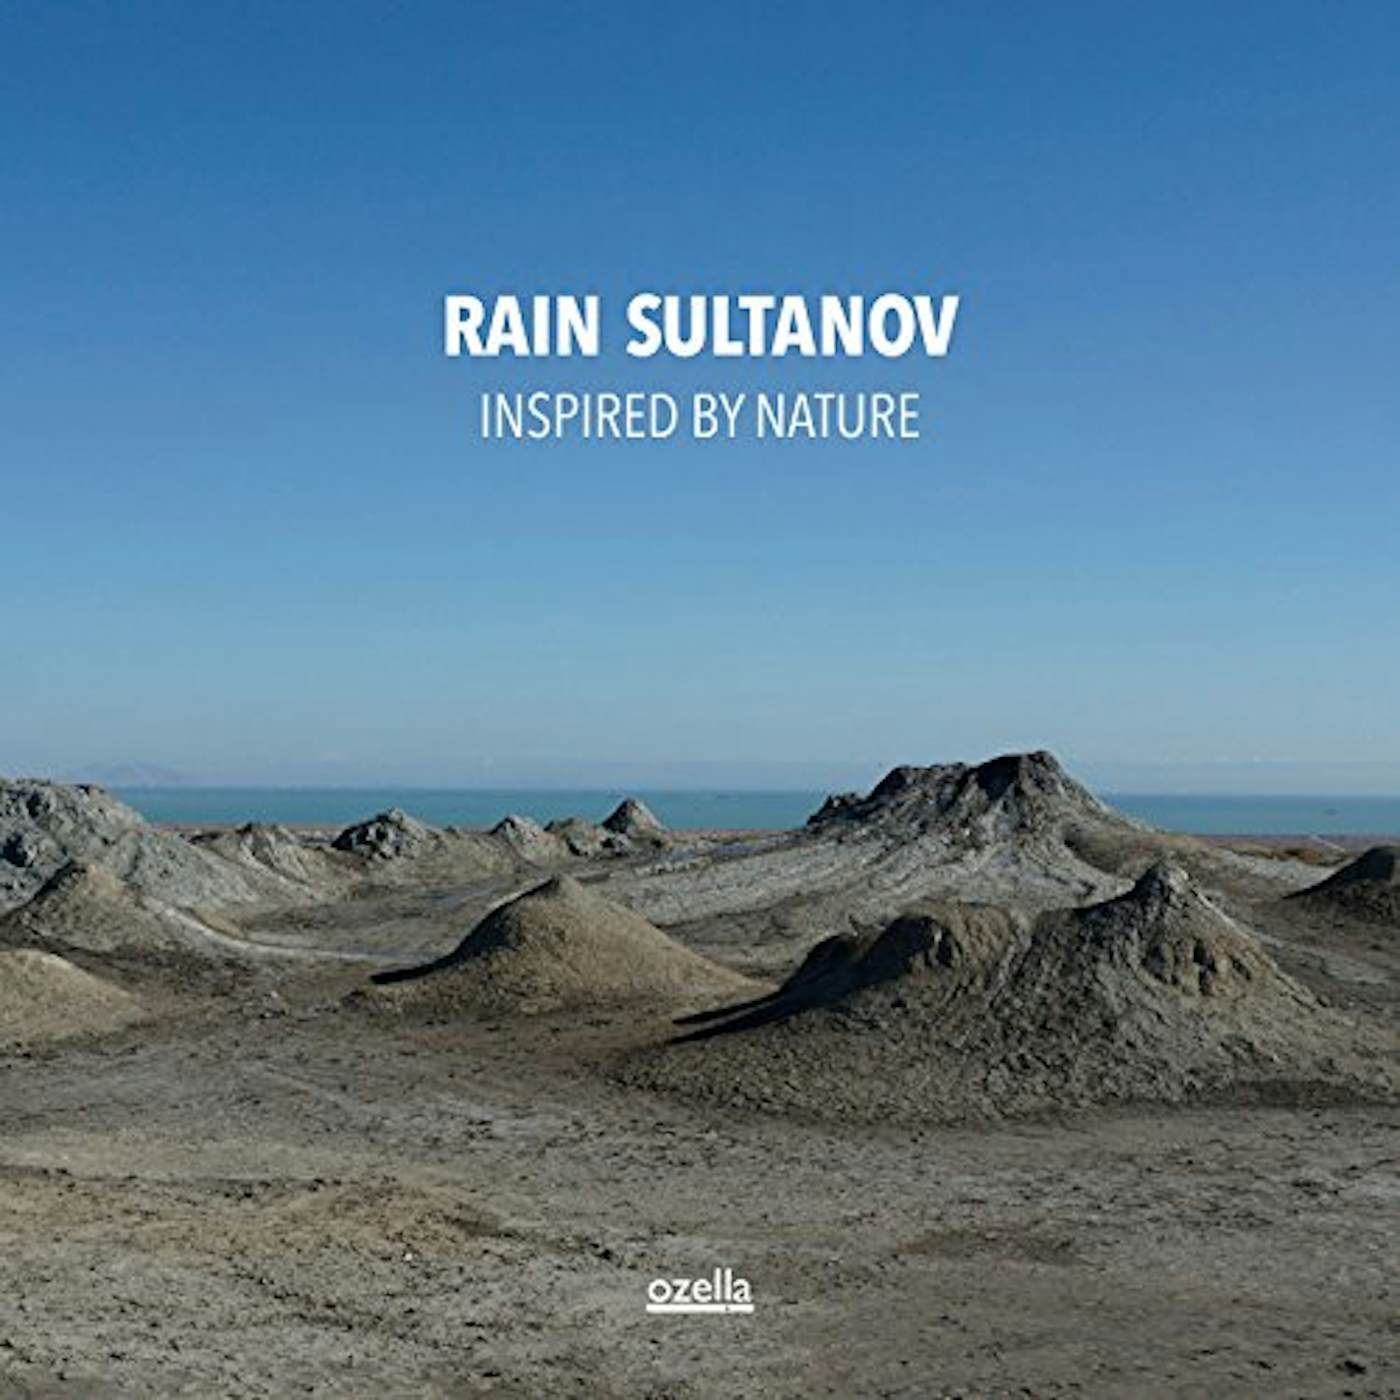 Rain Sultanov INSPIRED BY NATURE CD